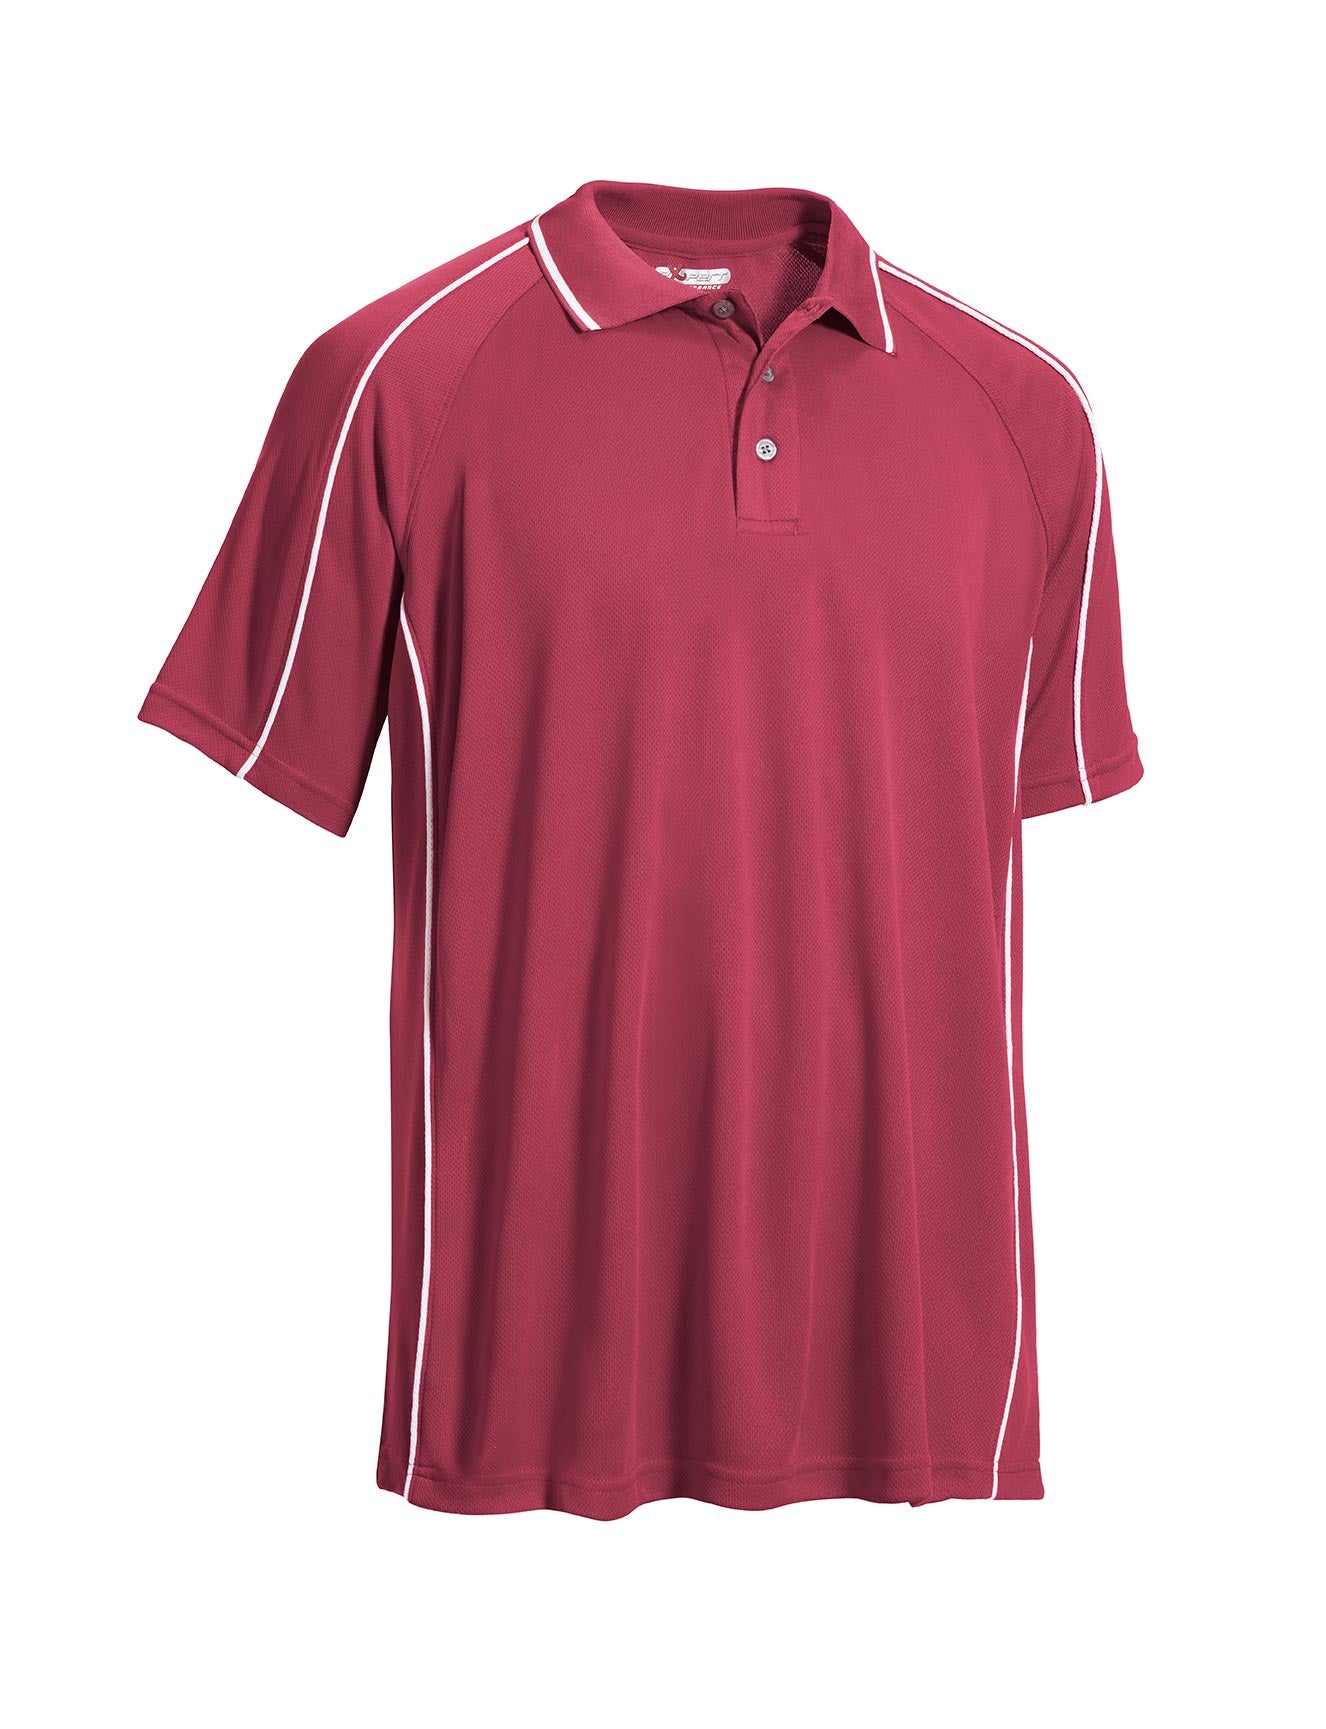 Expert Brand Wholesale Blank Activewear Men's Polo Golf Tennis Malibu Cardinal White Piping#cardinal